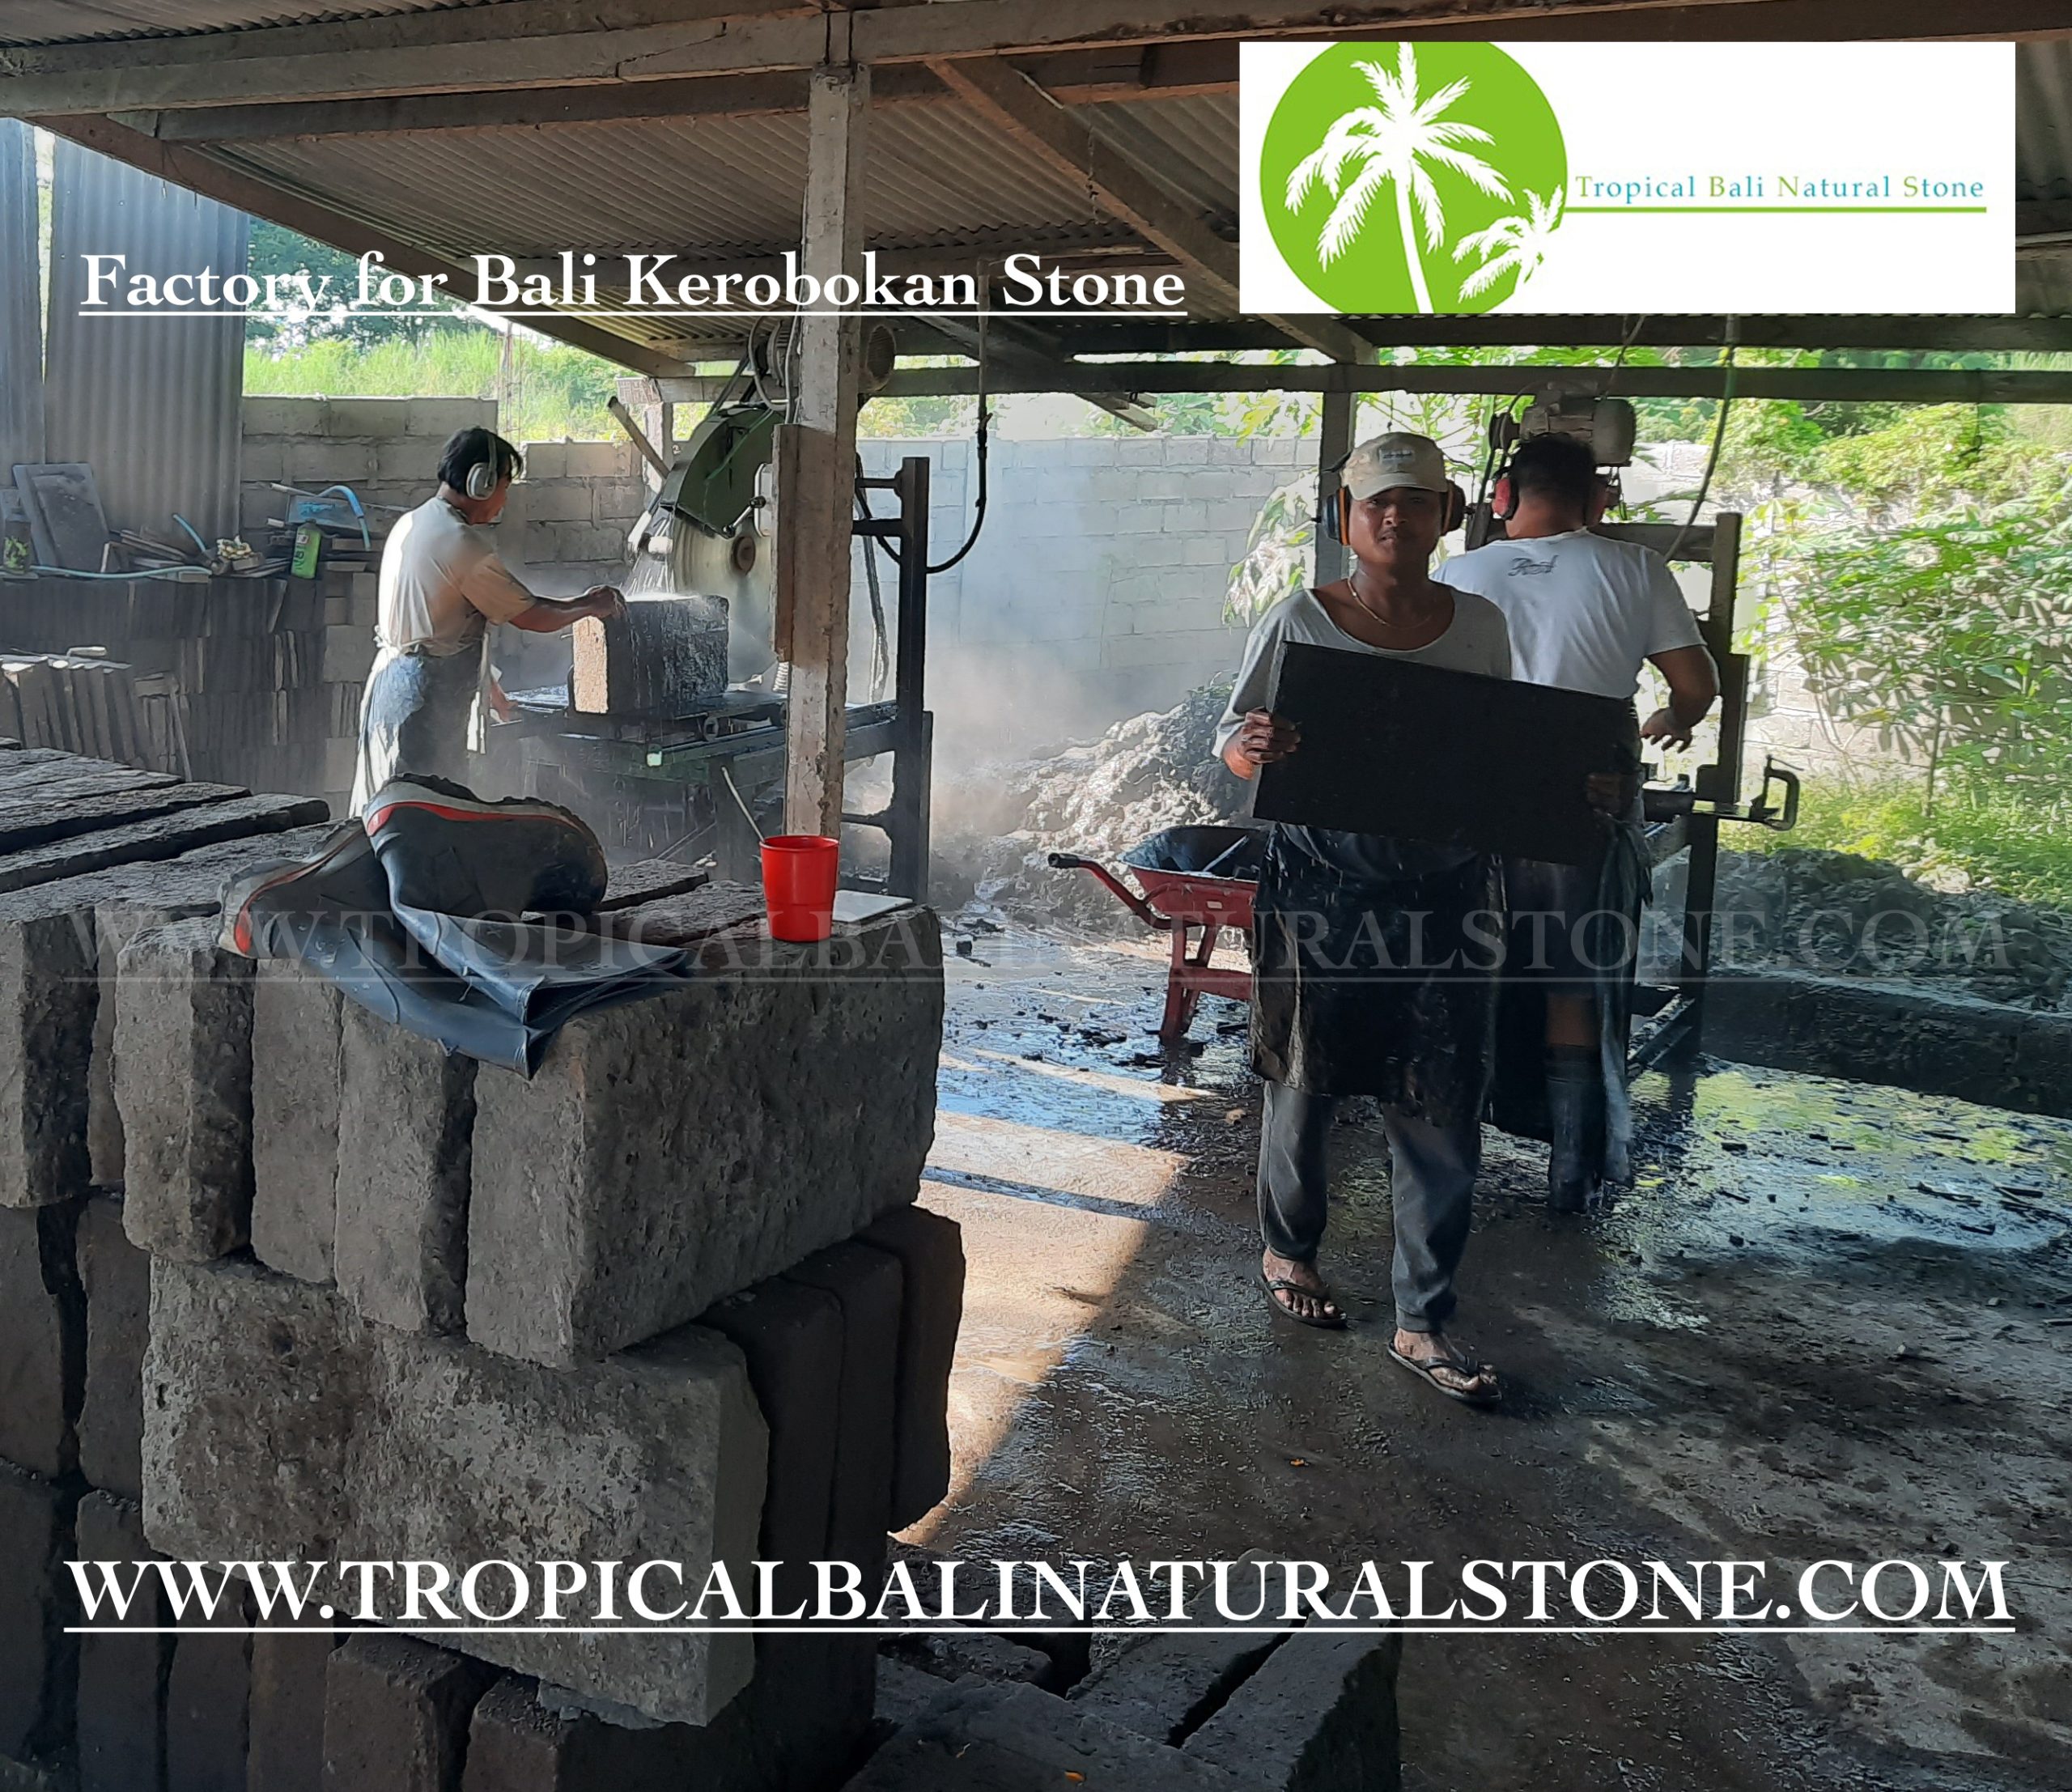 Balinese craftsmen of bali working with Bali Kerobokan stone.